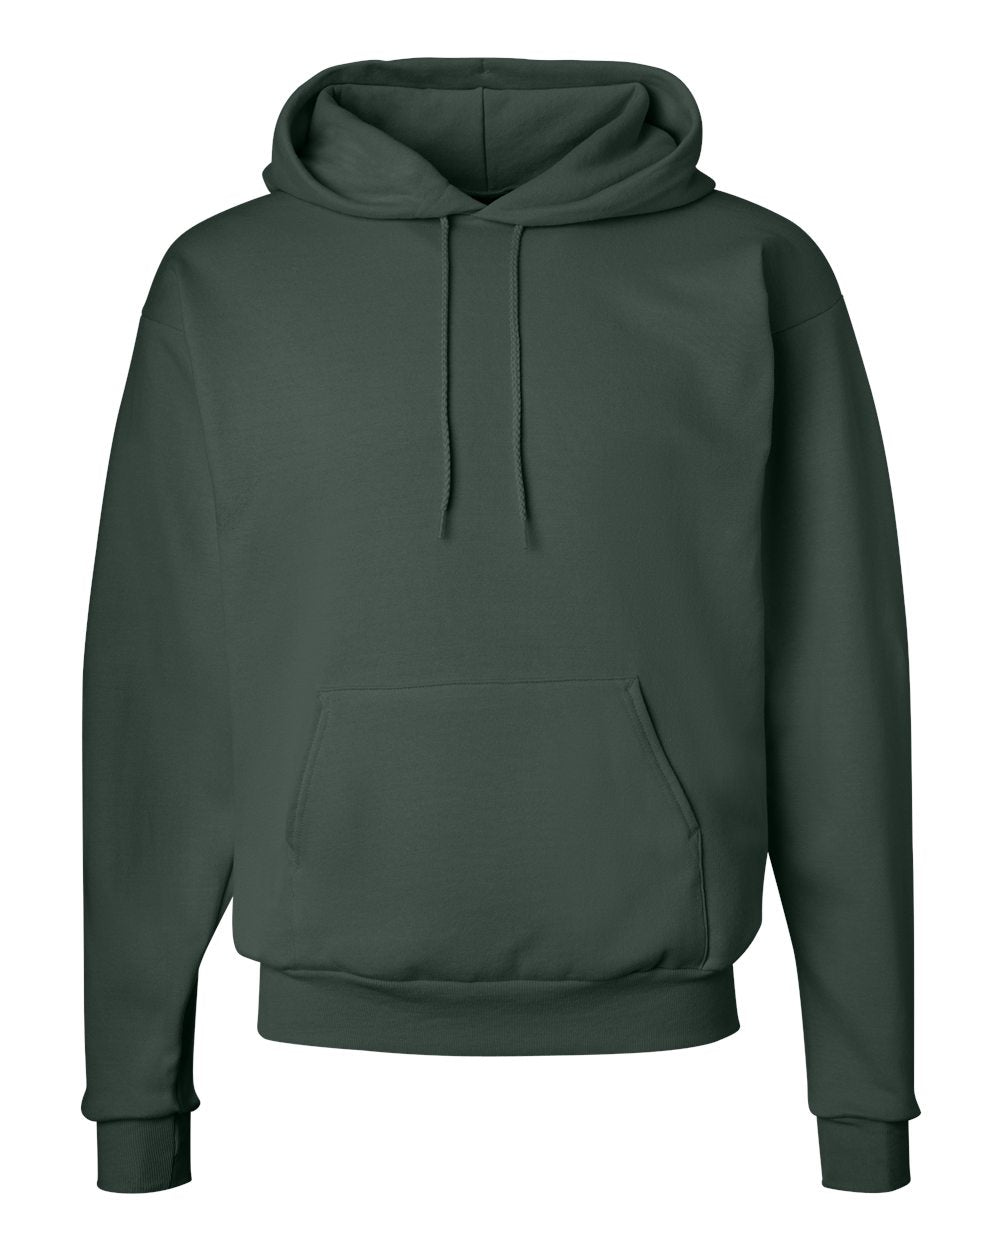 Pretreated Hanes P170 Ecosmart Hooded Sweatshirt